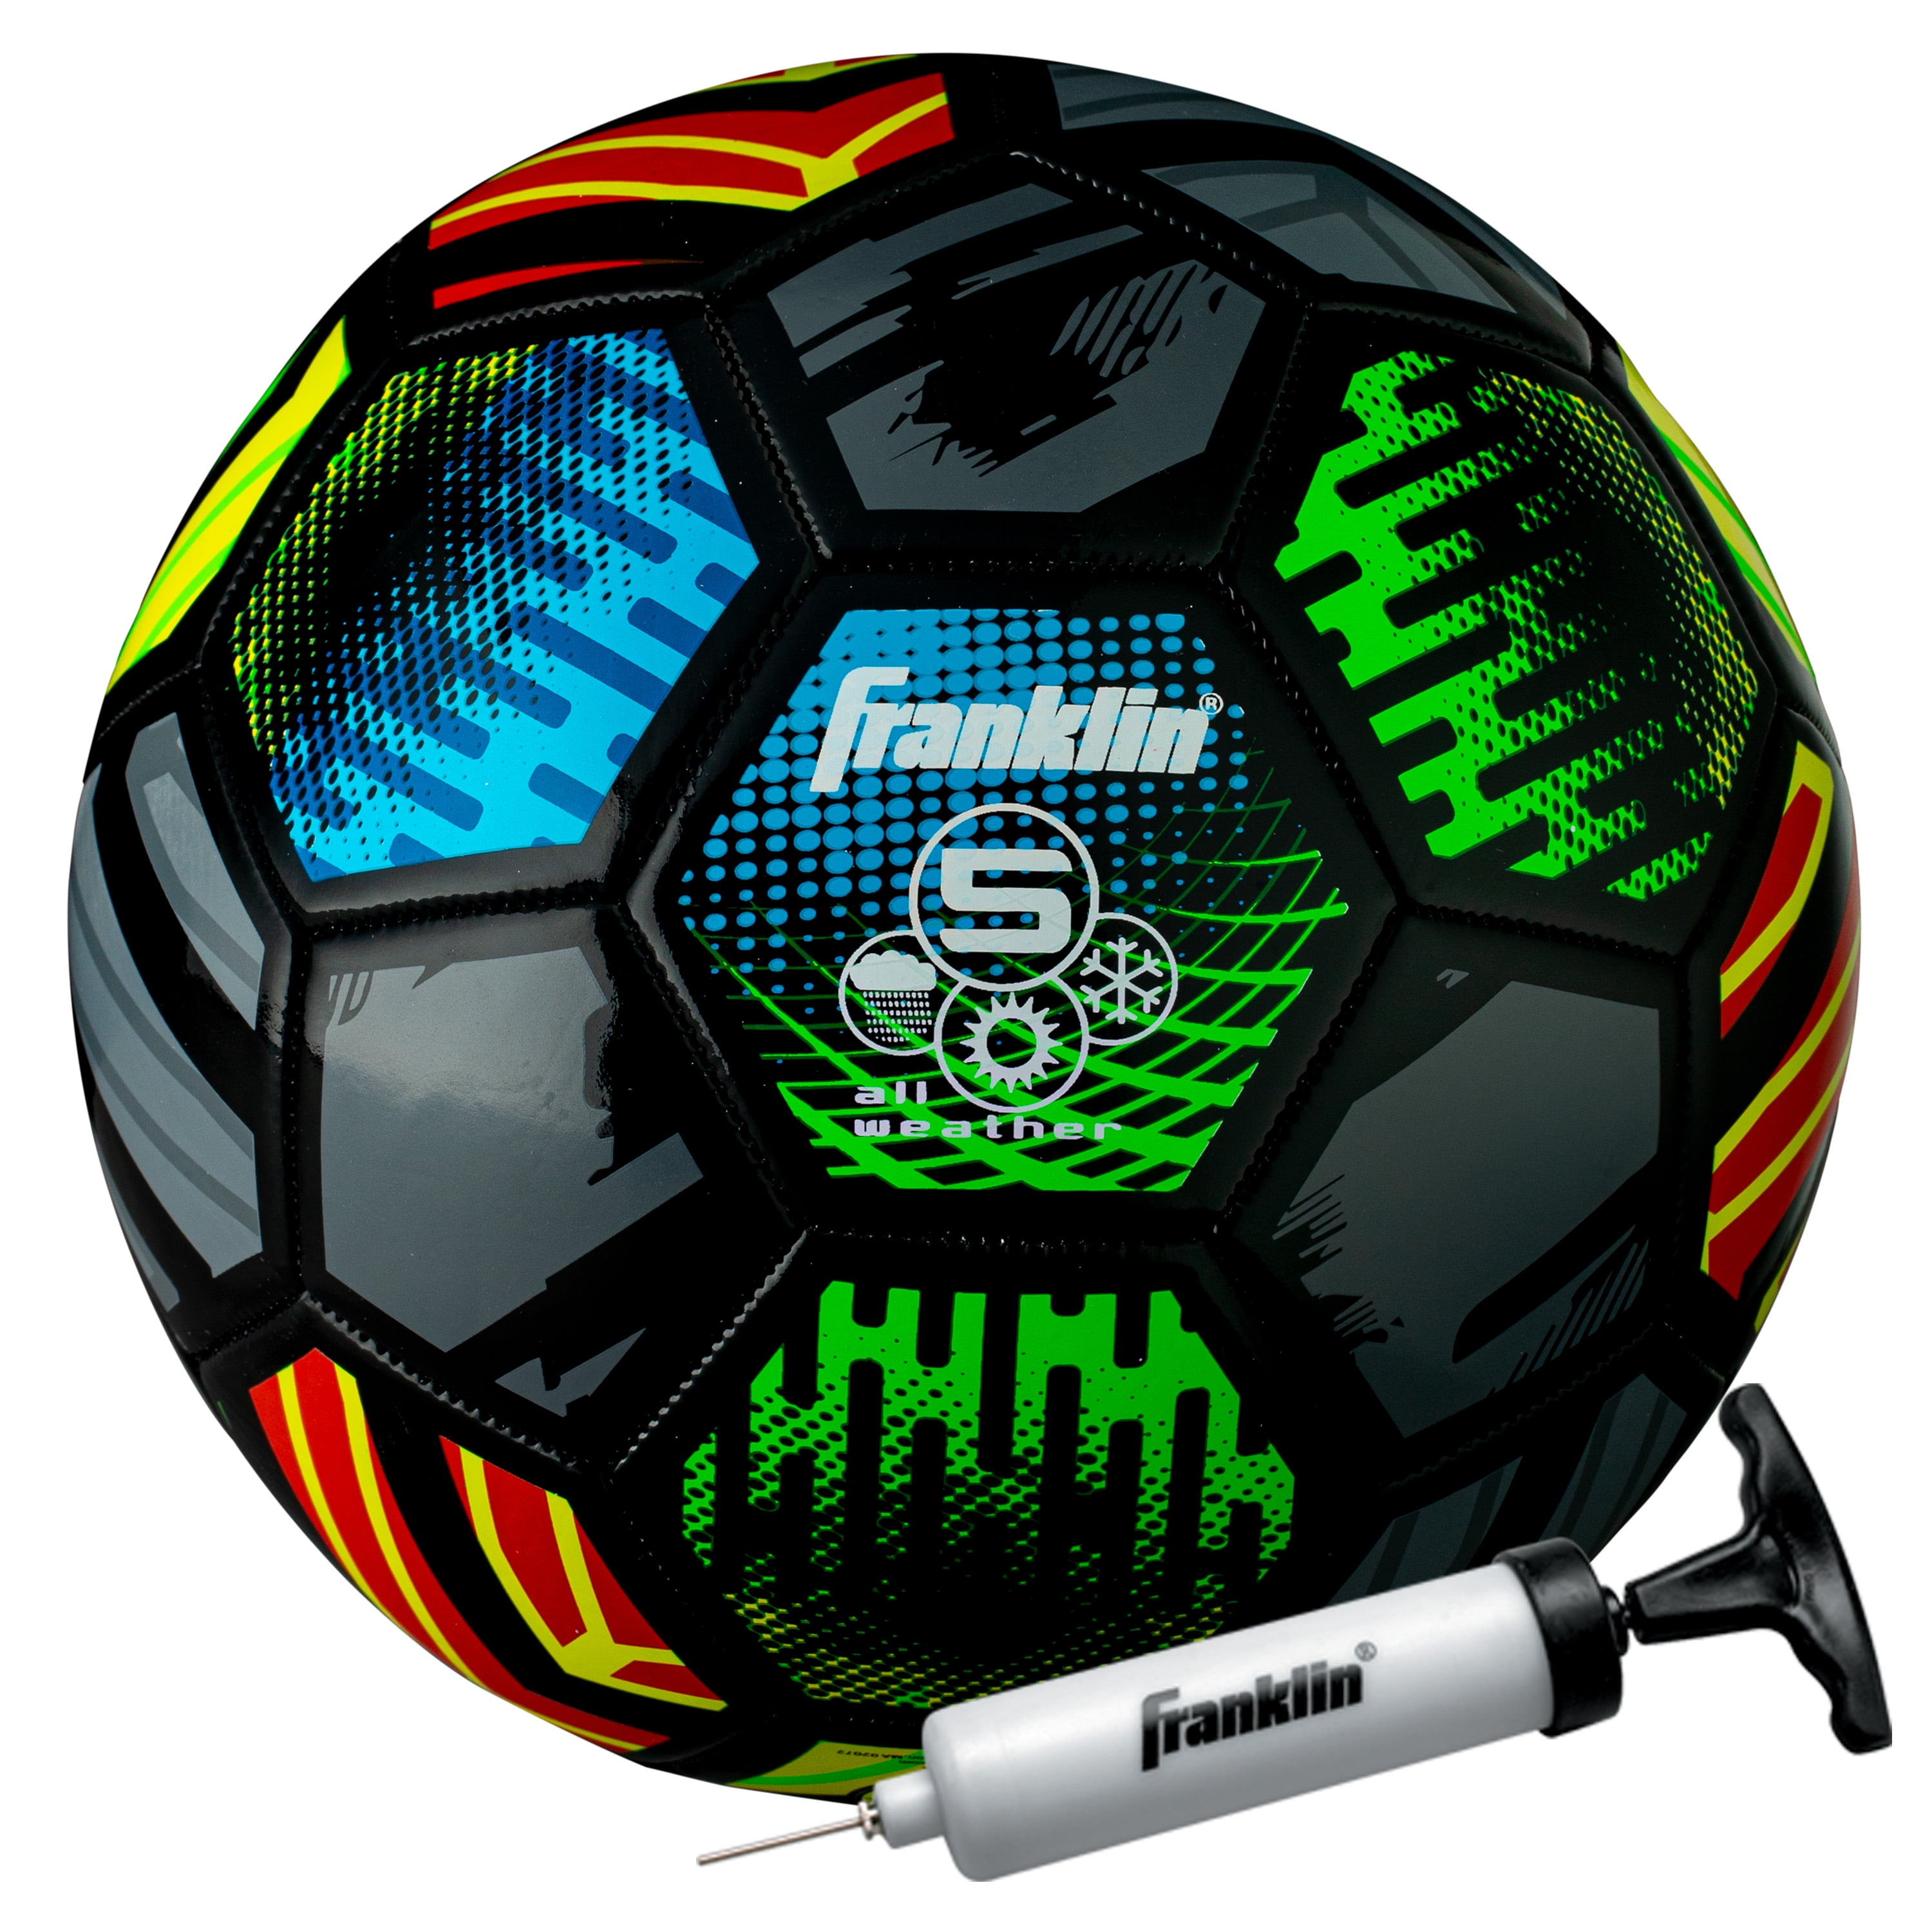 Franklin Inflatable Football Target 2 Footballs & Inflation Pump for sale online 